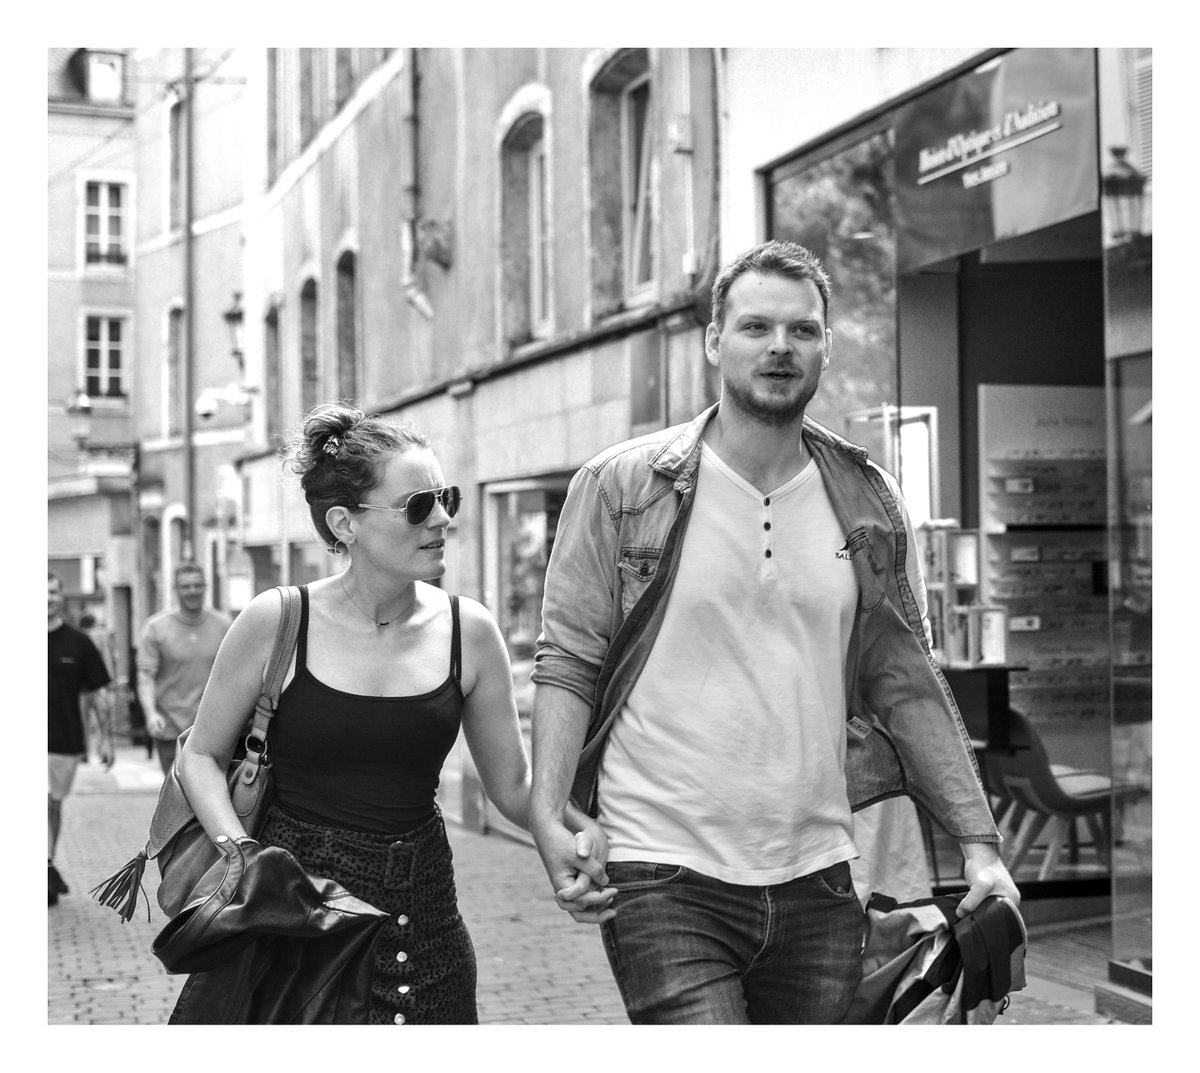 📸 SG* à Metz, mai 2024.
#Photo #Photographie #Photography #CandidPhotography #StreetPhoto #StreetPhotography #UrbanPhoto #UrbanPhotography #BlackAndWhitePhotography #BlackAndWhite #People #CityLife #StreetLife #Metz